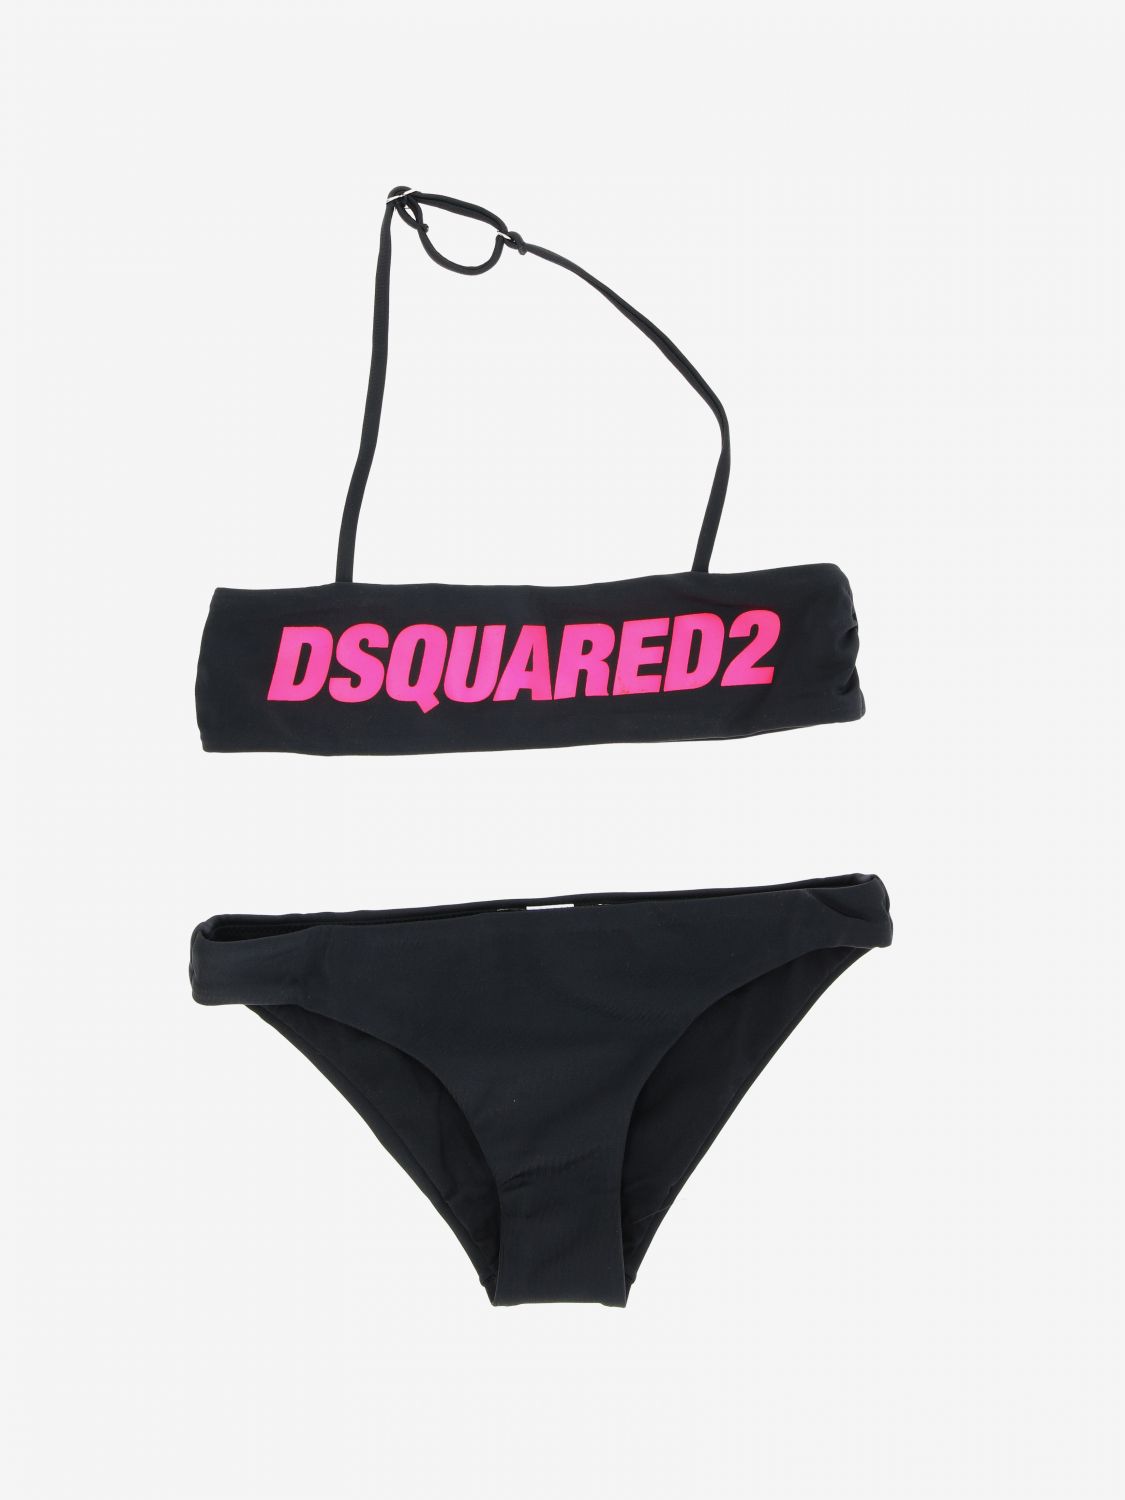 dsquared swimwear 2016